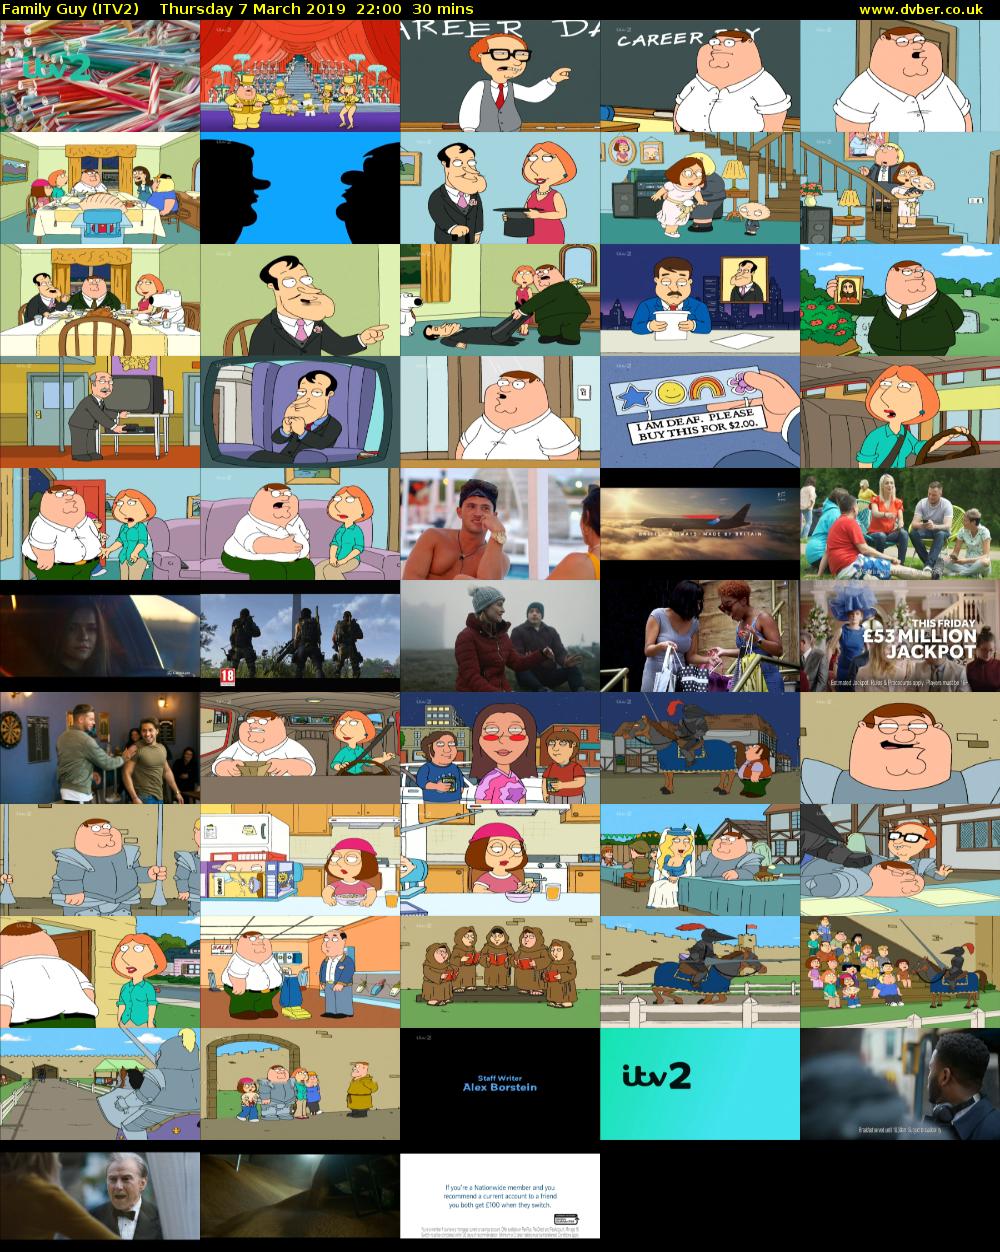 Family Guy (ITV2) Thursday 7 March 2019 22:00 - 22:30